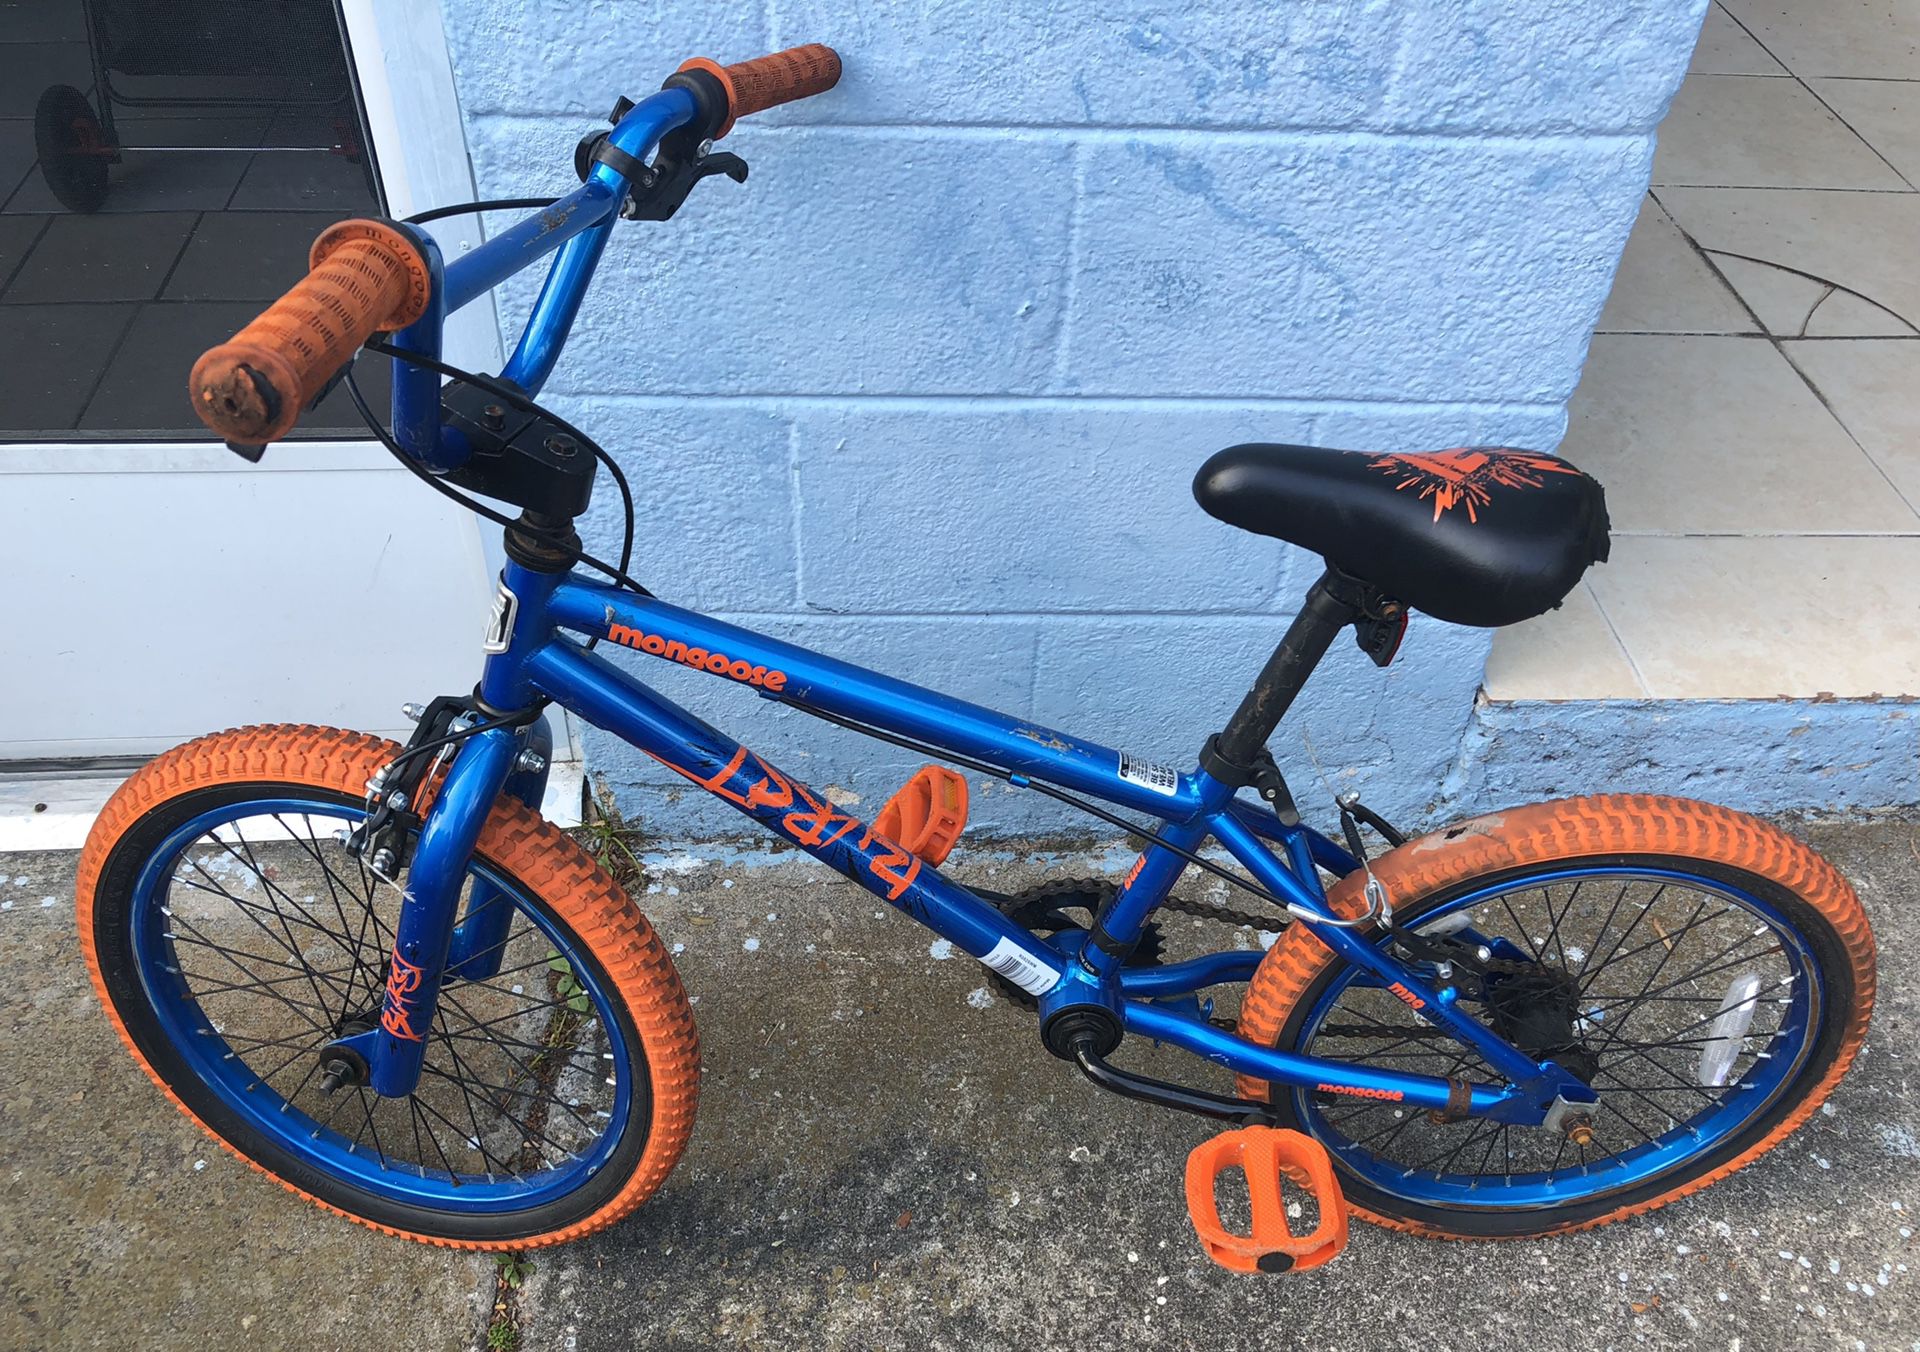 Mongoose 18-in Burst Kid's Bike - Needs new rear tire